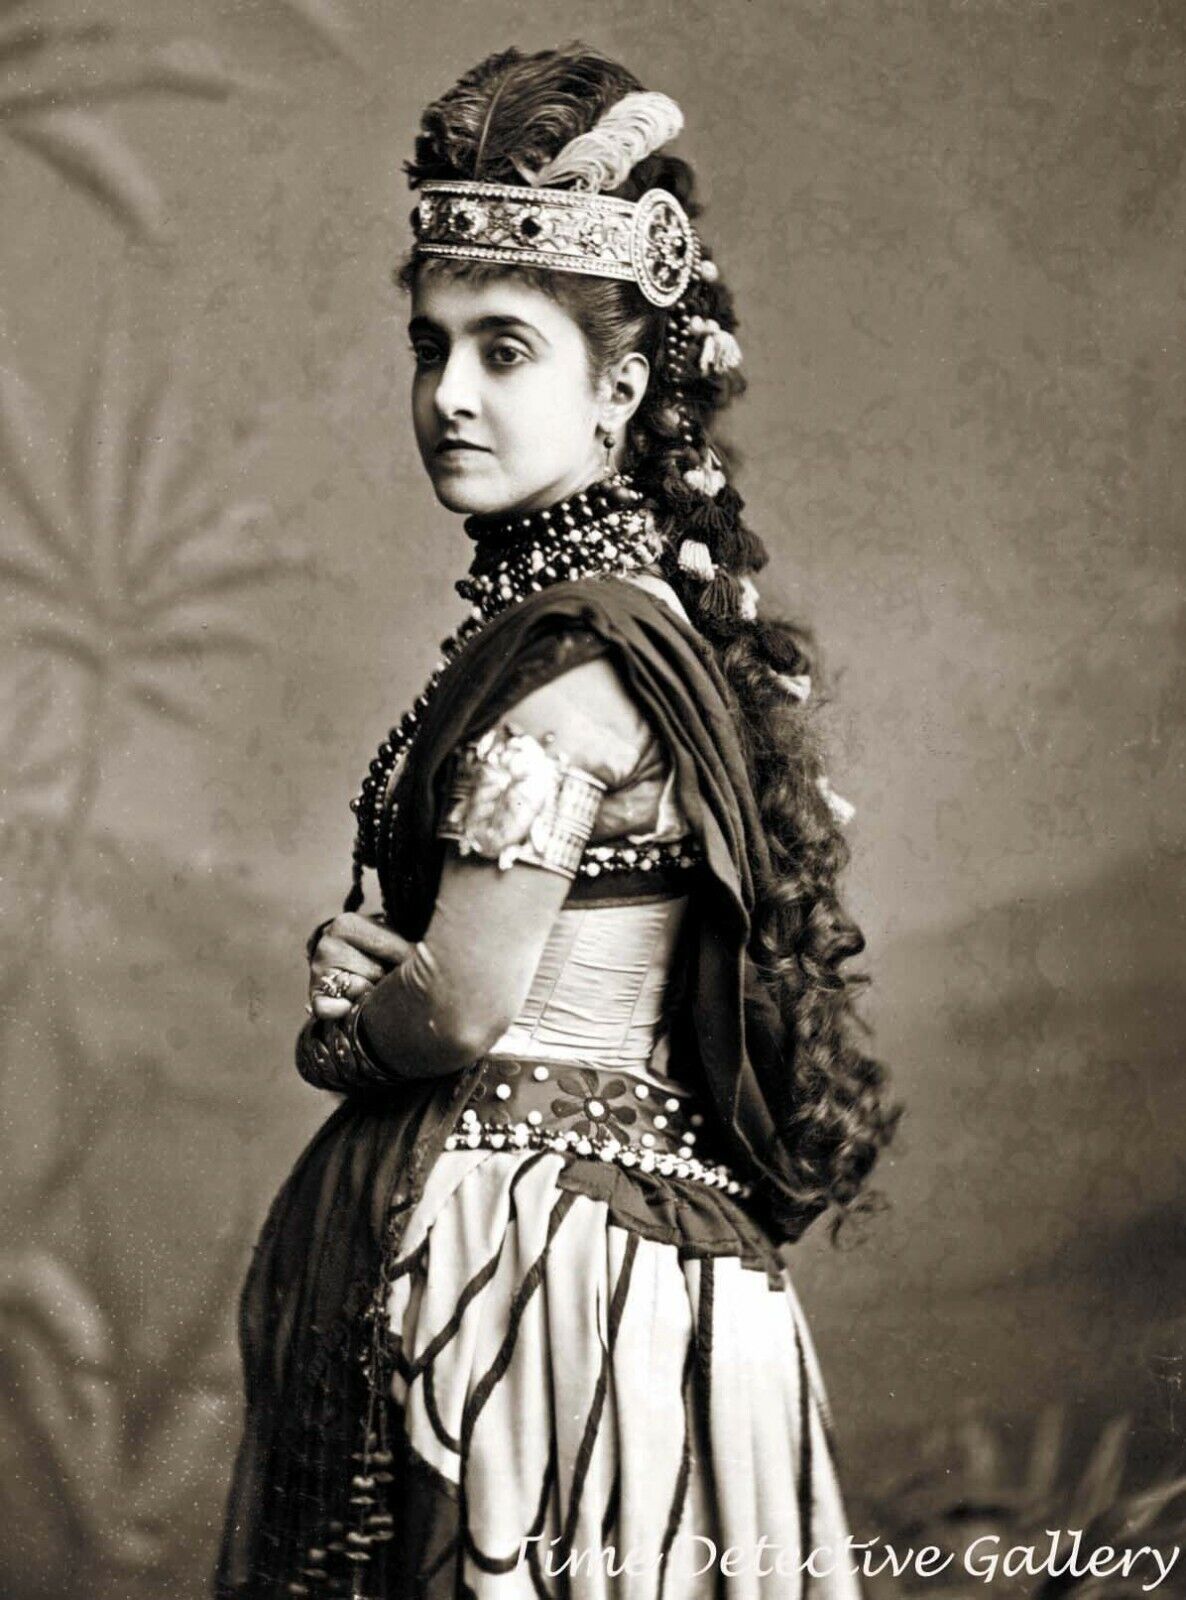 Opera Singer Adelina Patti in an Elaborate Costume - Historic Photo Print